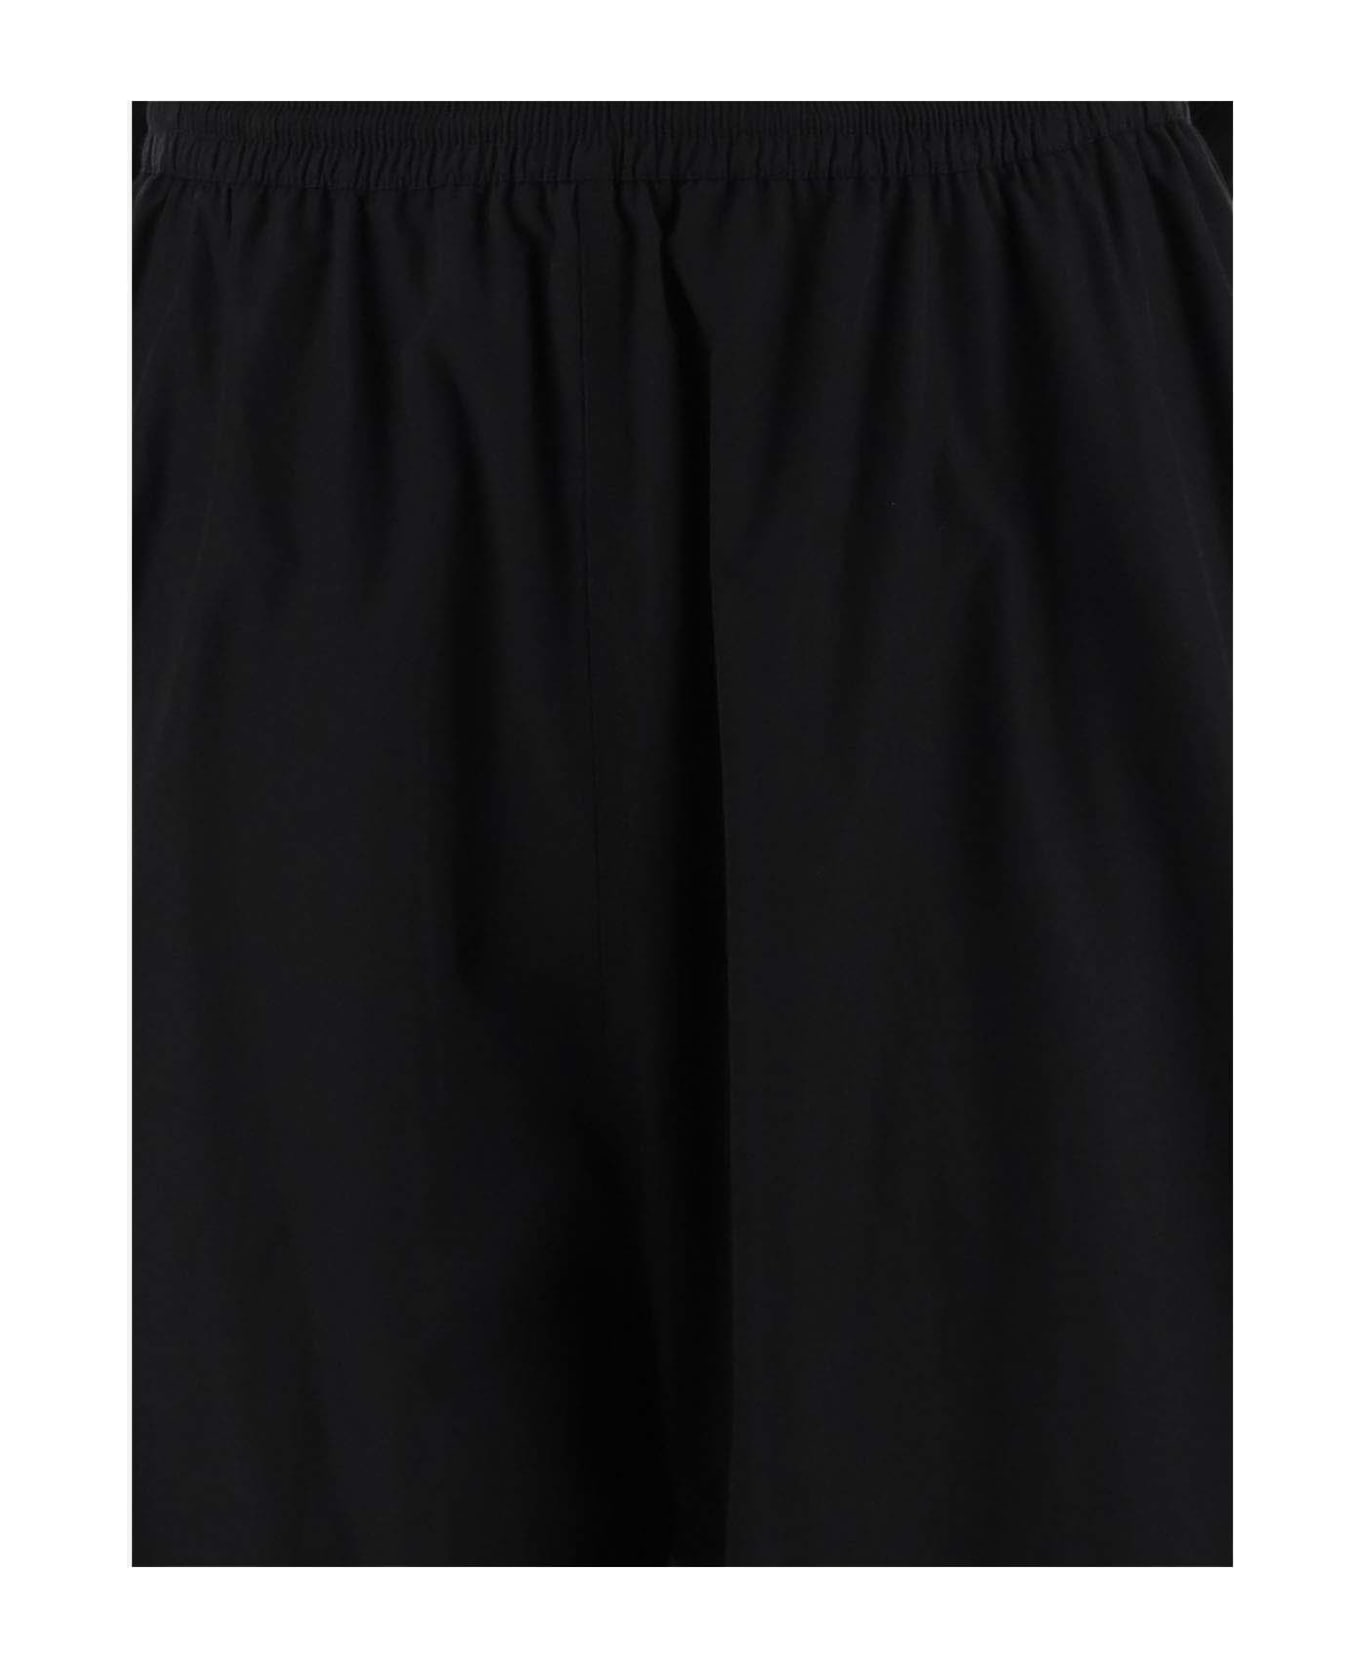 Balenciaga Track Pants In Technical Fabric - Black